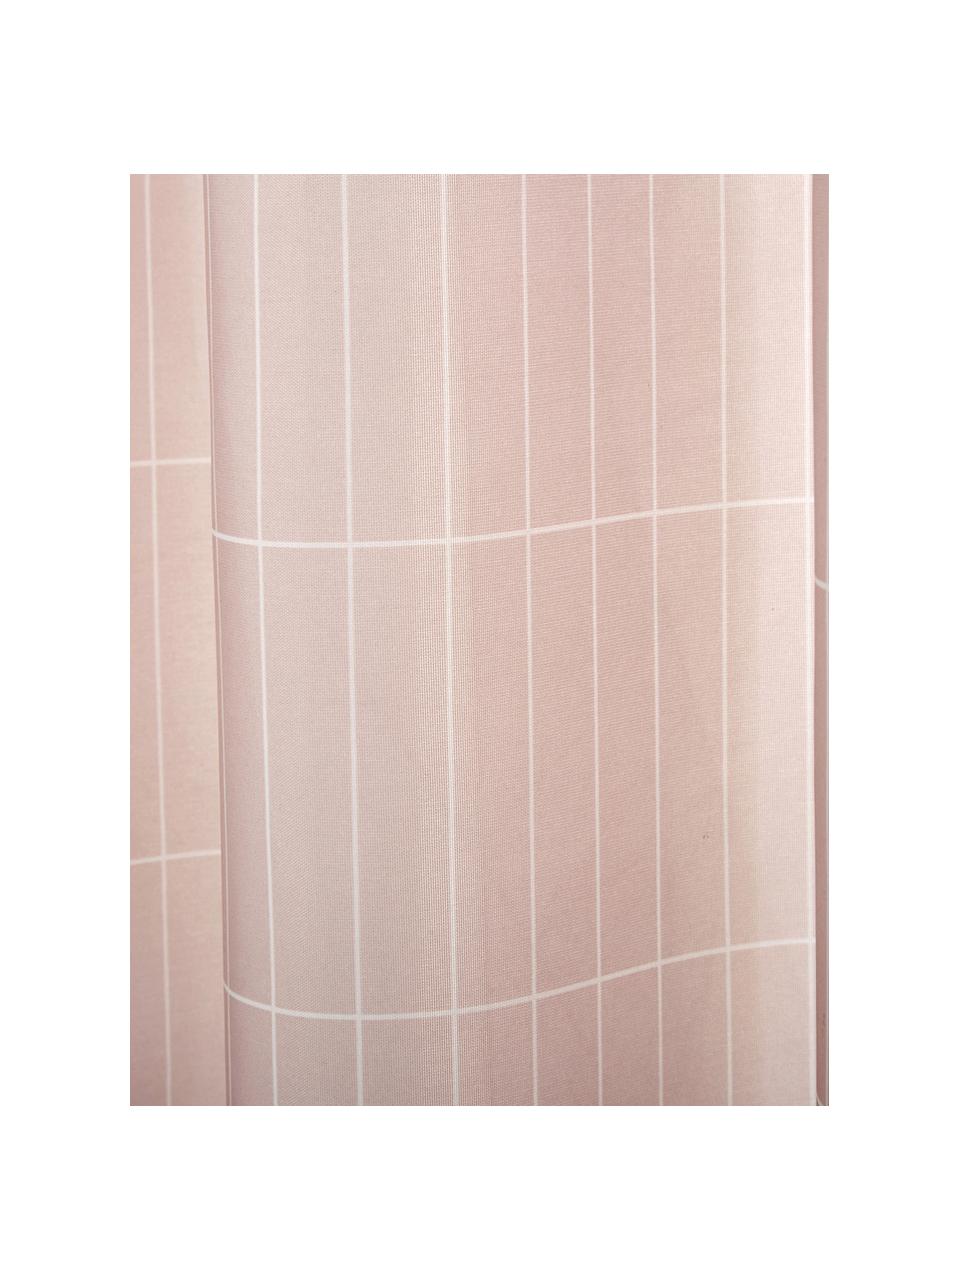 Tenda da doccia a quadri Tiles, Rosa, Larg. 180 x Lung. 200 cm